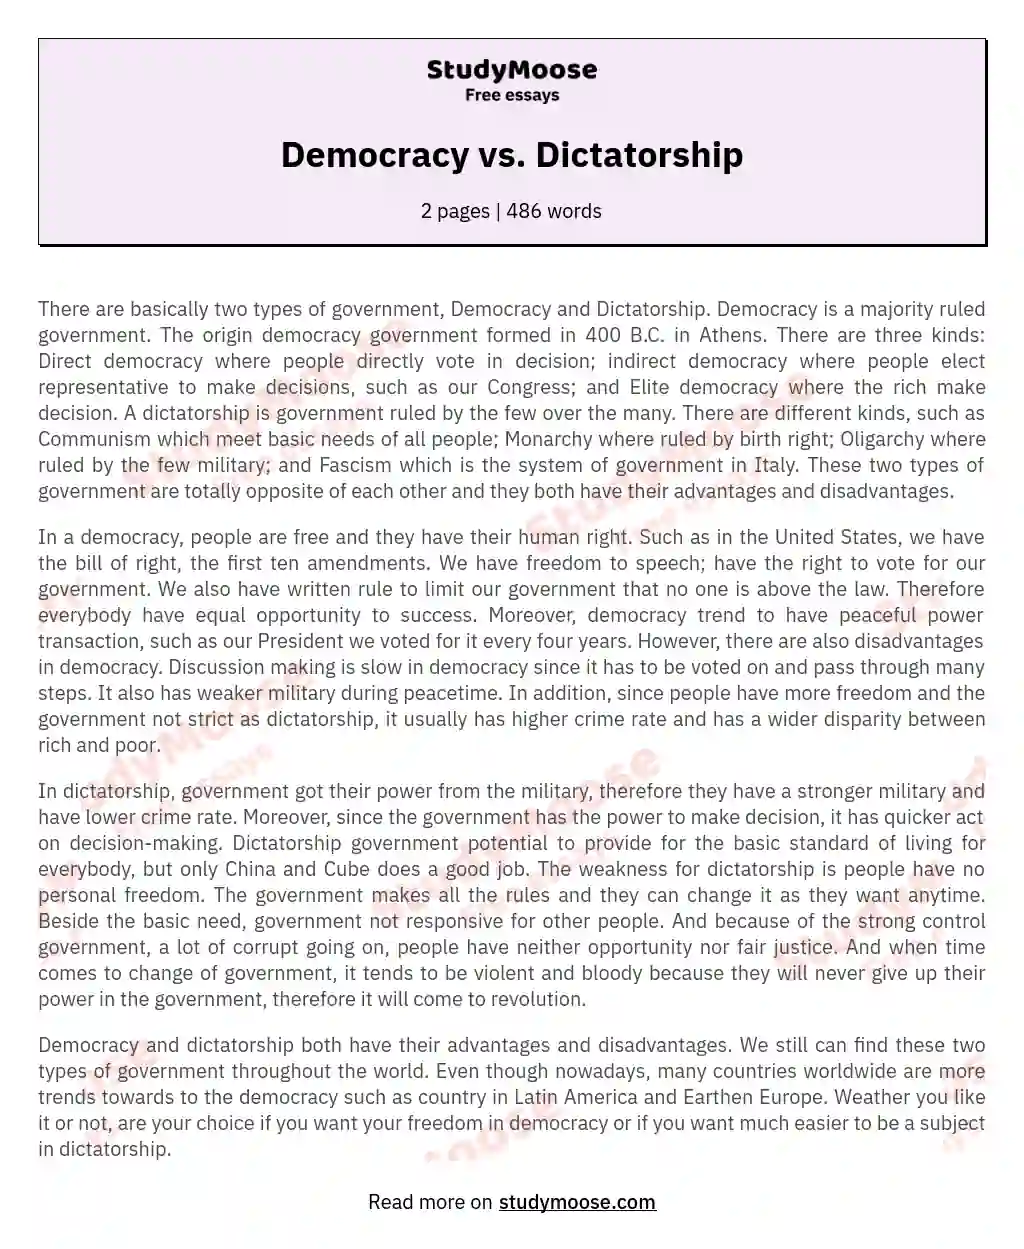 Democracy vs. Dictatorship essay